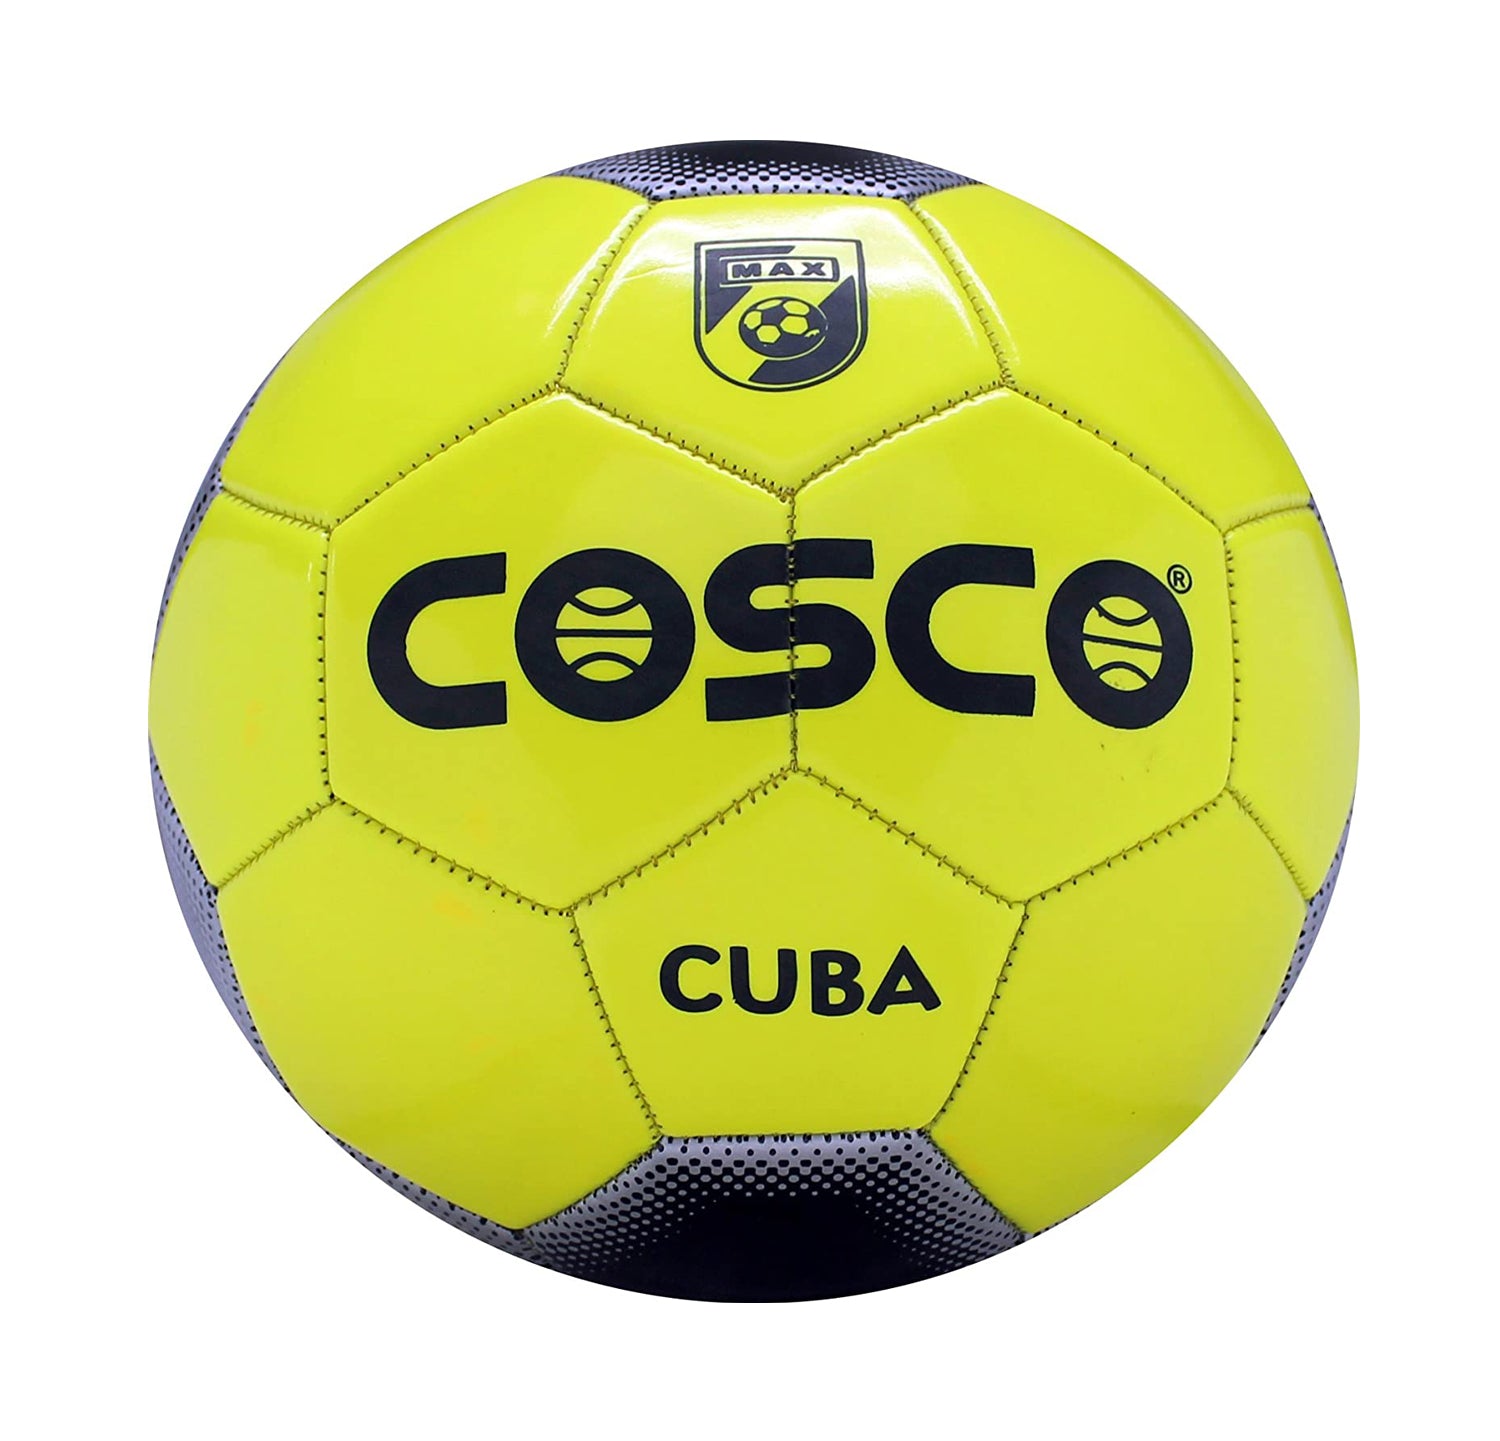 Cosco Cuba Football - Yellow, Size 5 - Best Price online Prokicksports.com